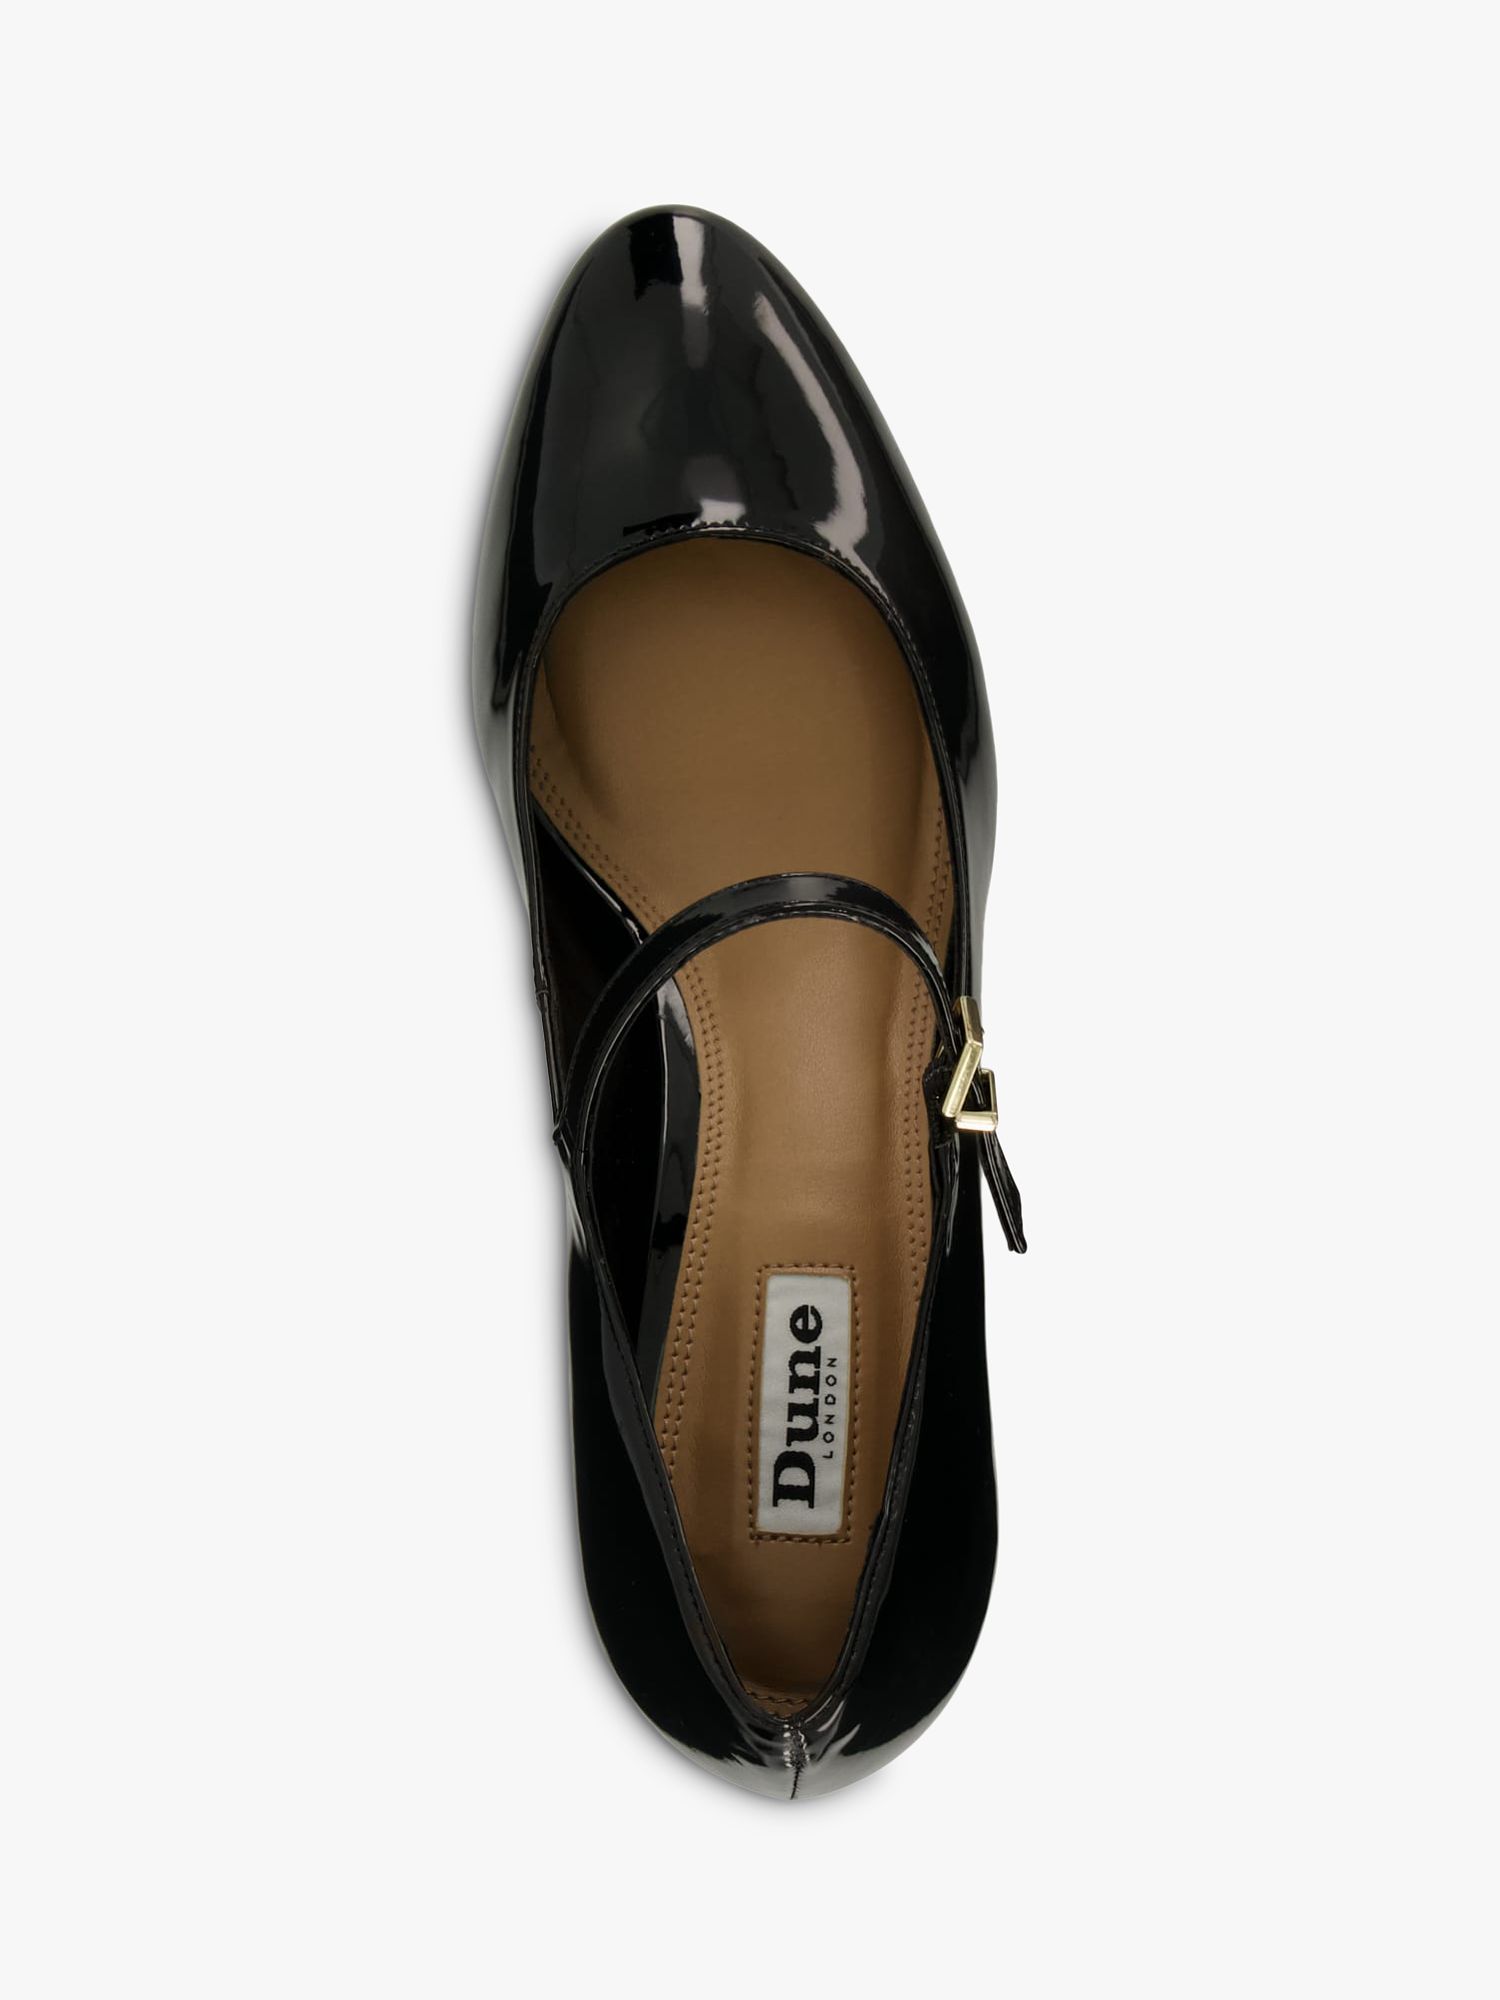 Dune Alenna Patent Mary Jane Court Shoes, Black at John Lewis & Partners